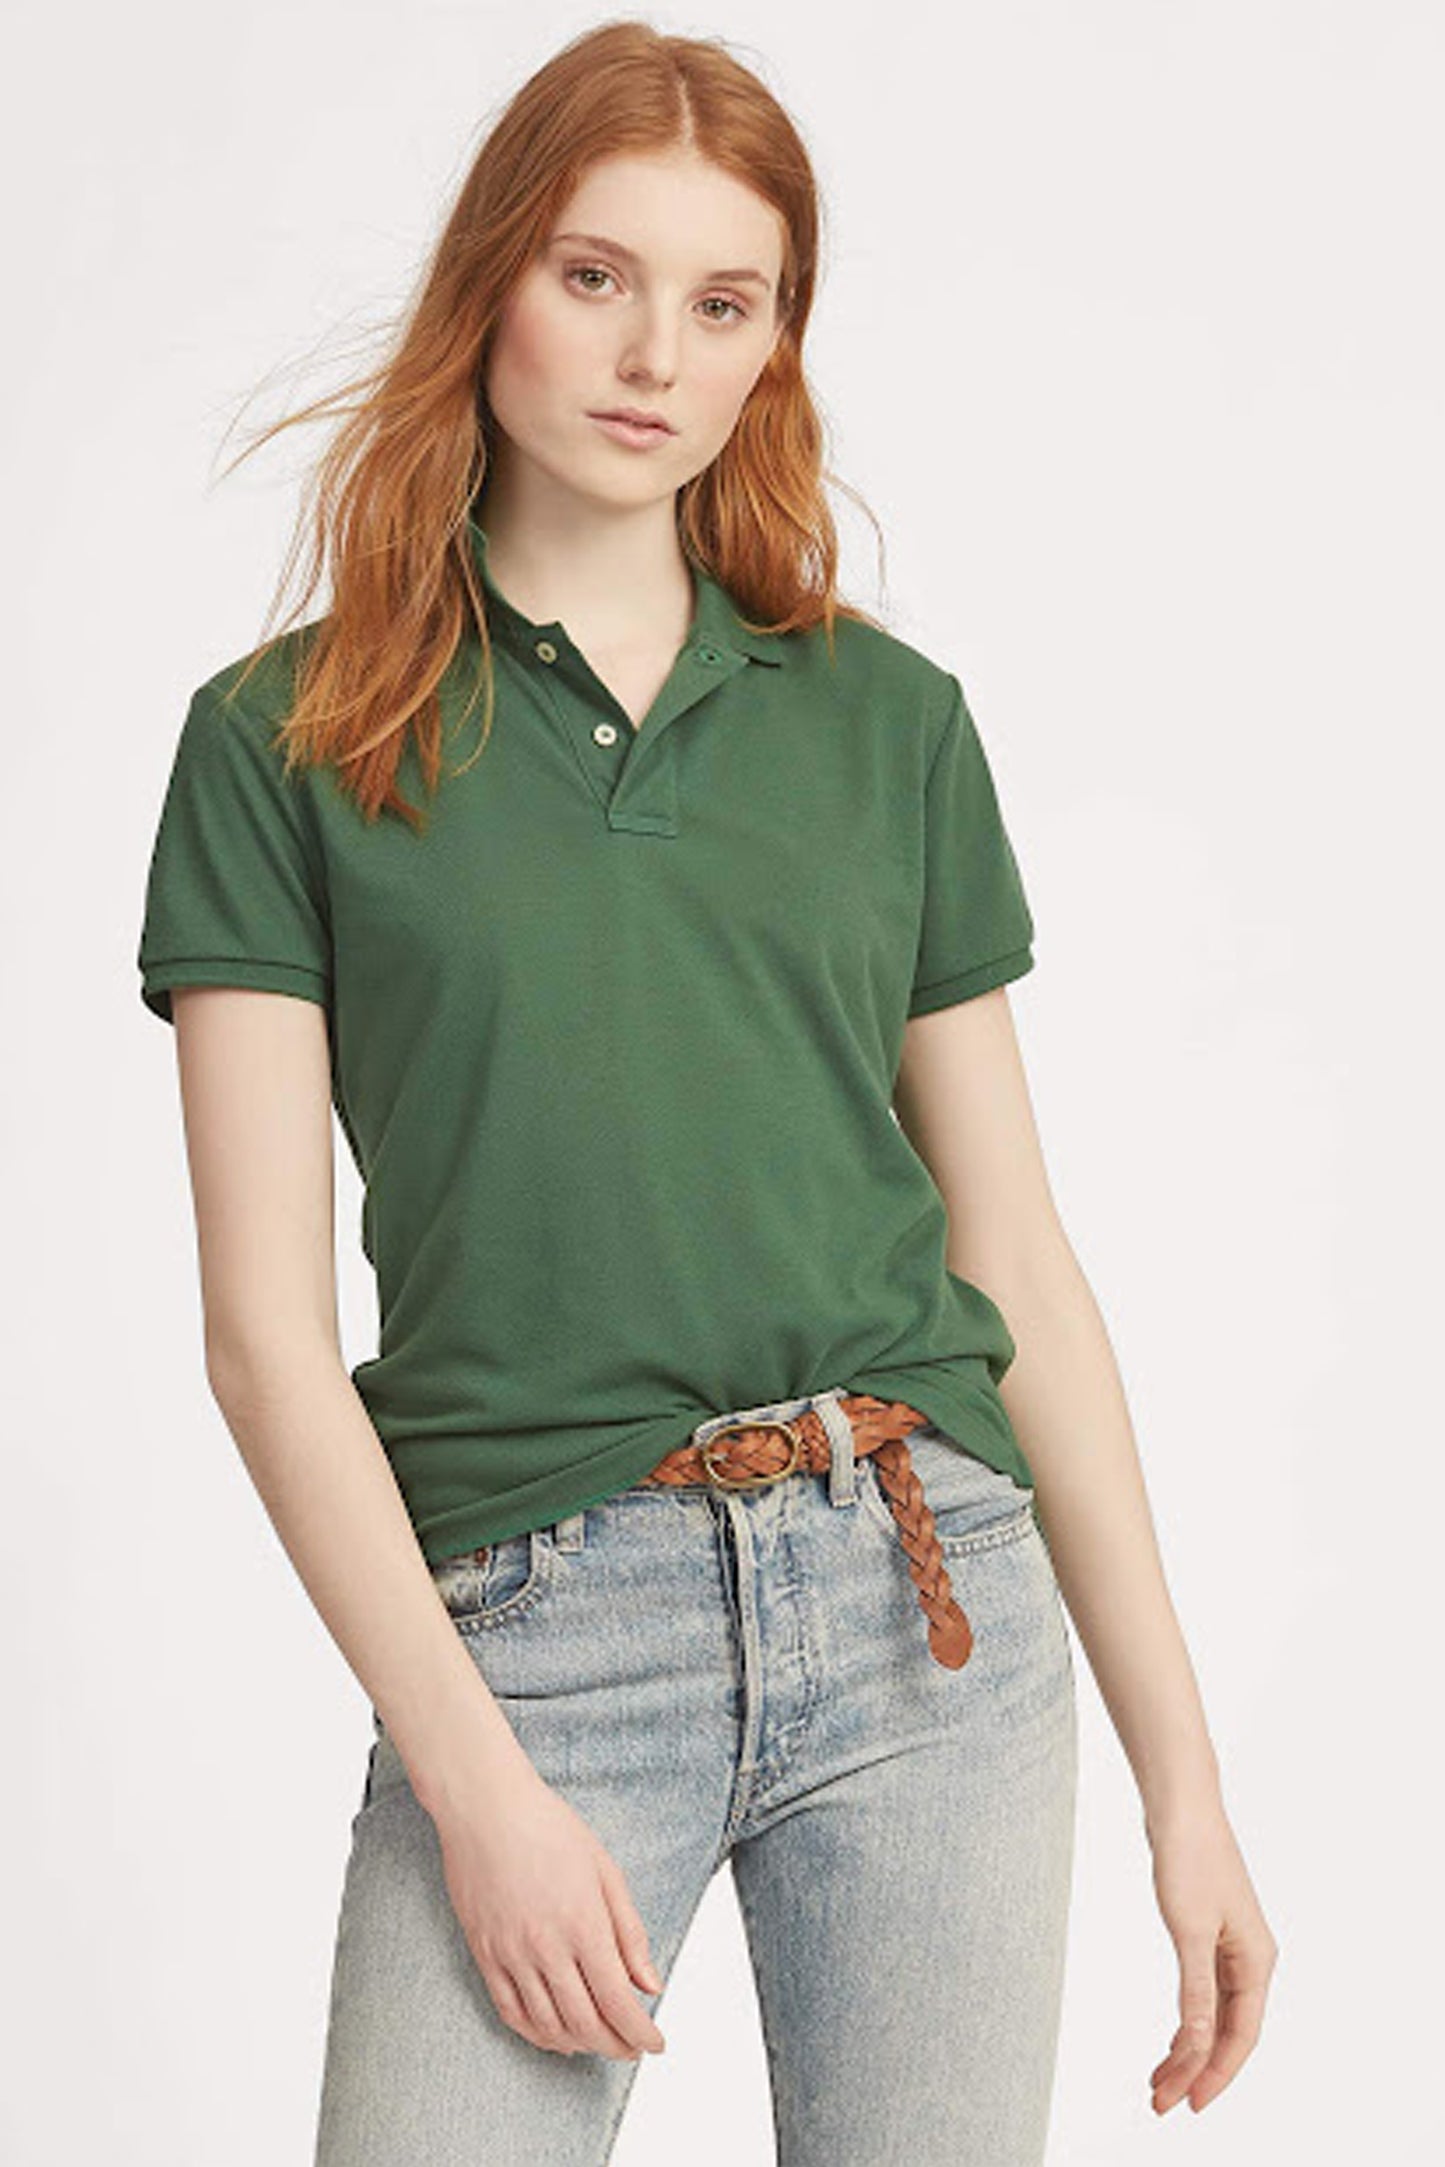 Women's Army Green Polo Shirt